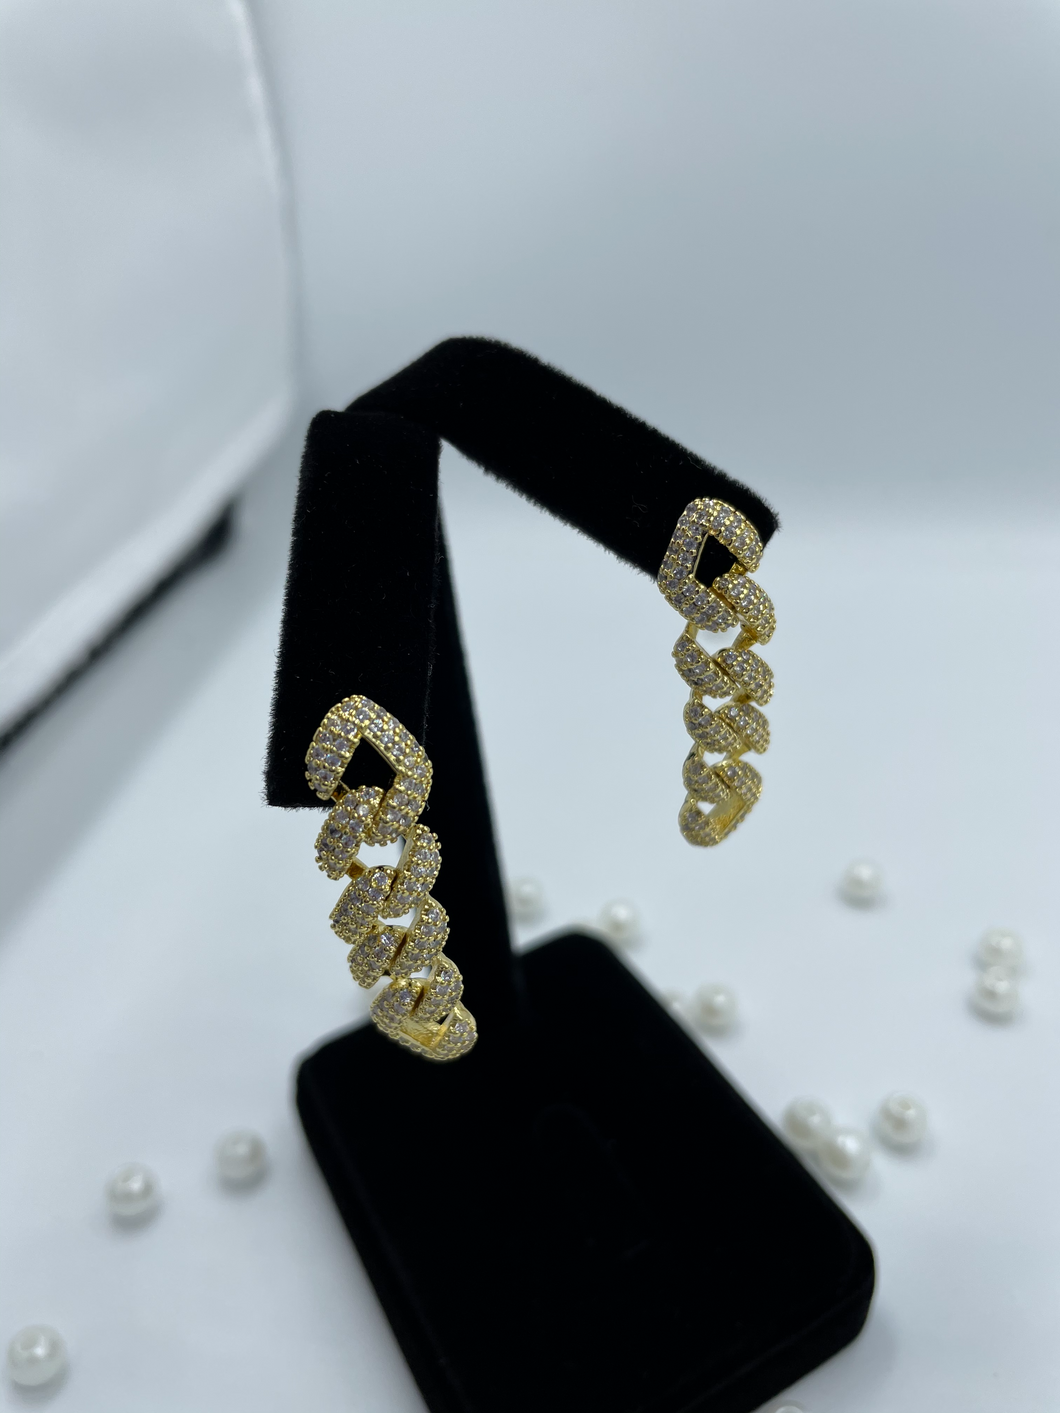 18K Gold Filled Cubin Link Chain Dangle Drop Earrings with CZ Stones